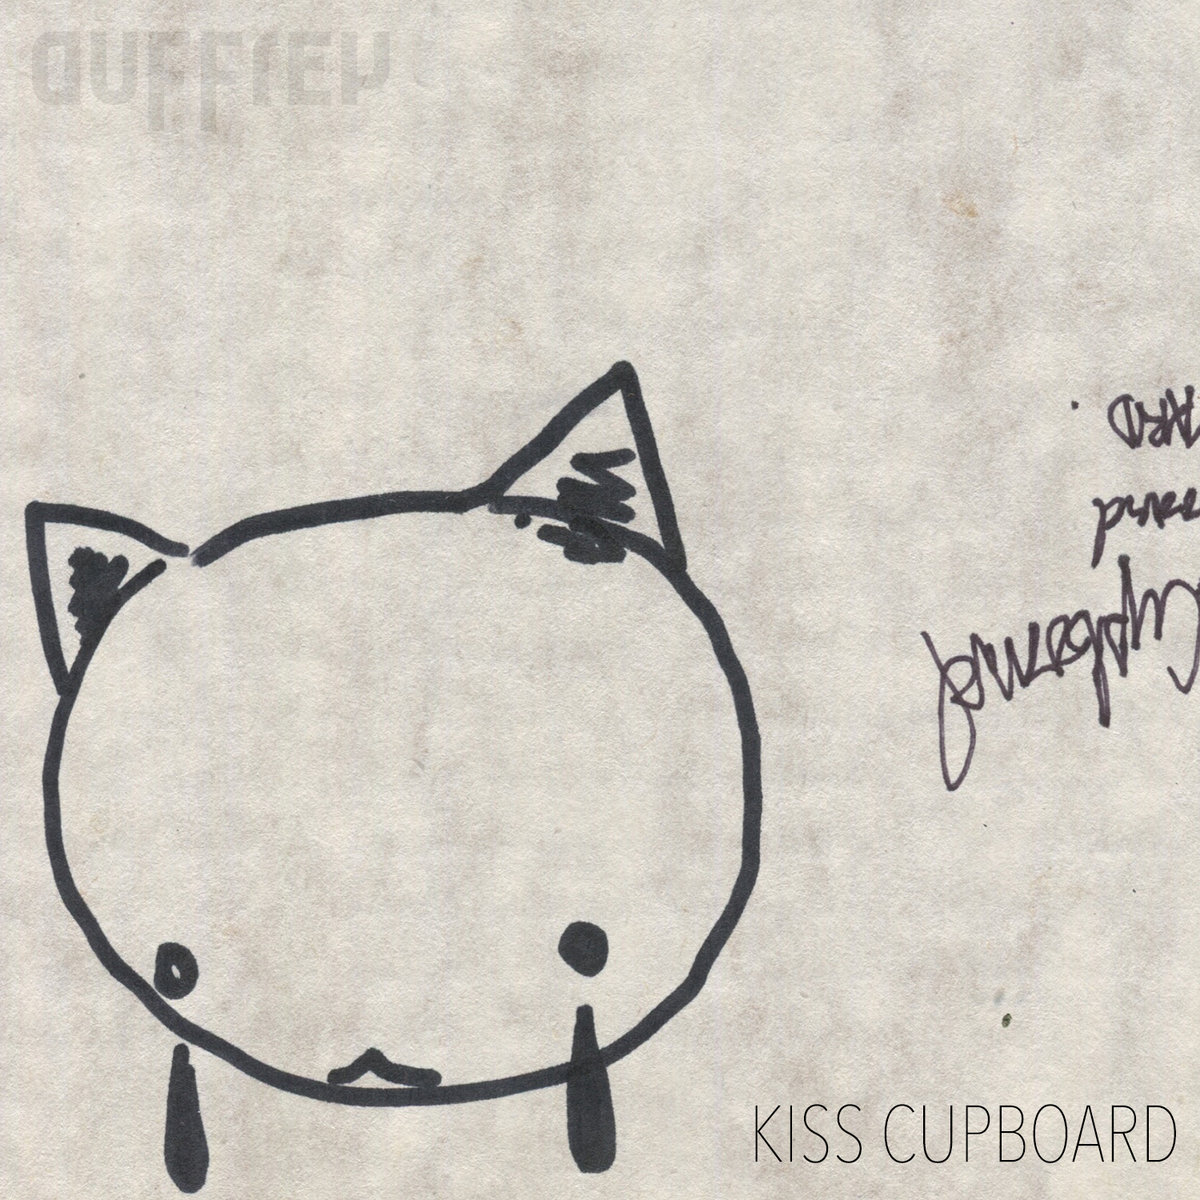 Duffrey - Paresthesia @ 'Kiss Cupboard' album (bass, electronic)